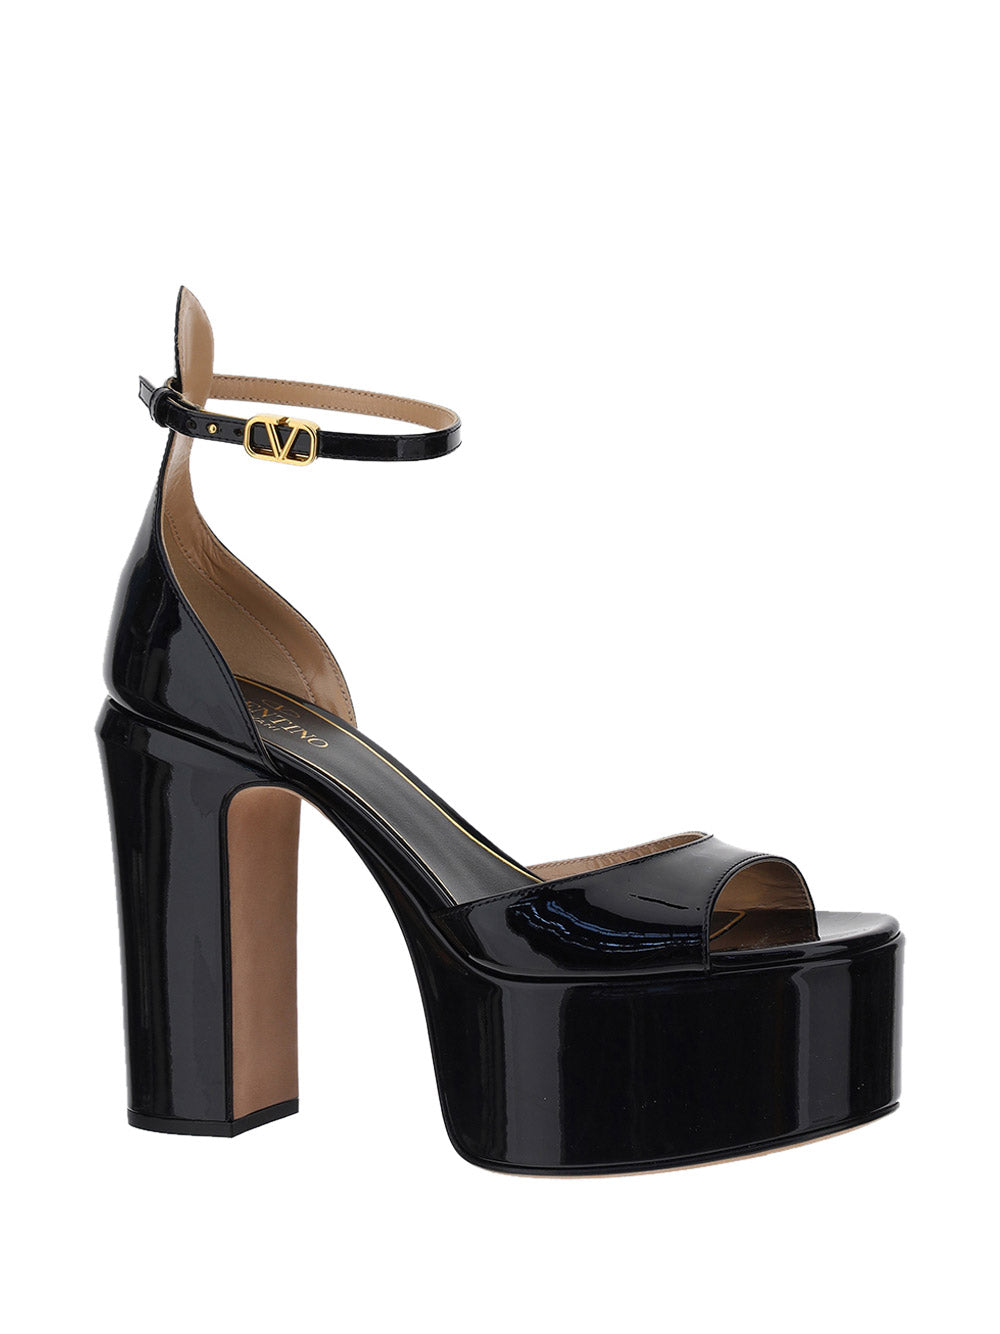 Tan-go Platform Patent Leather Sandal 125mm - Black